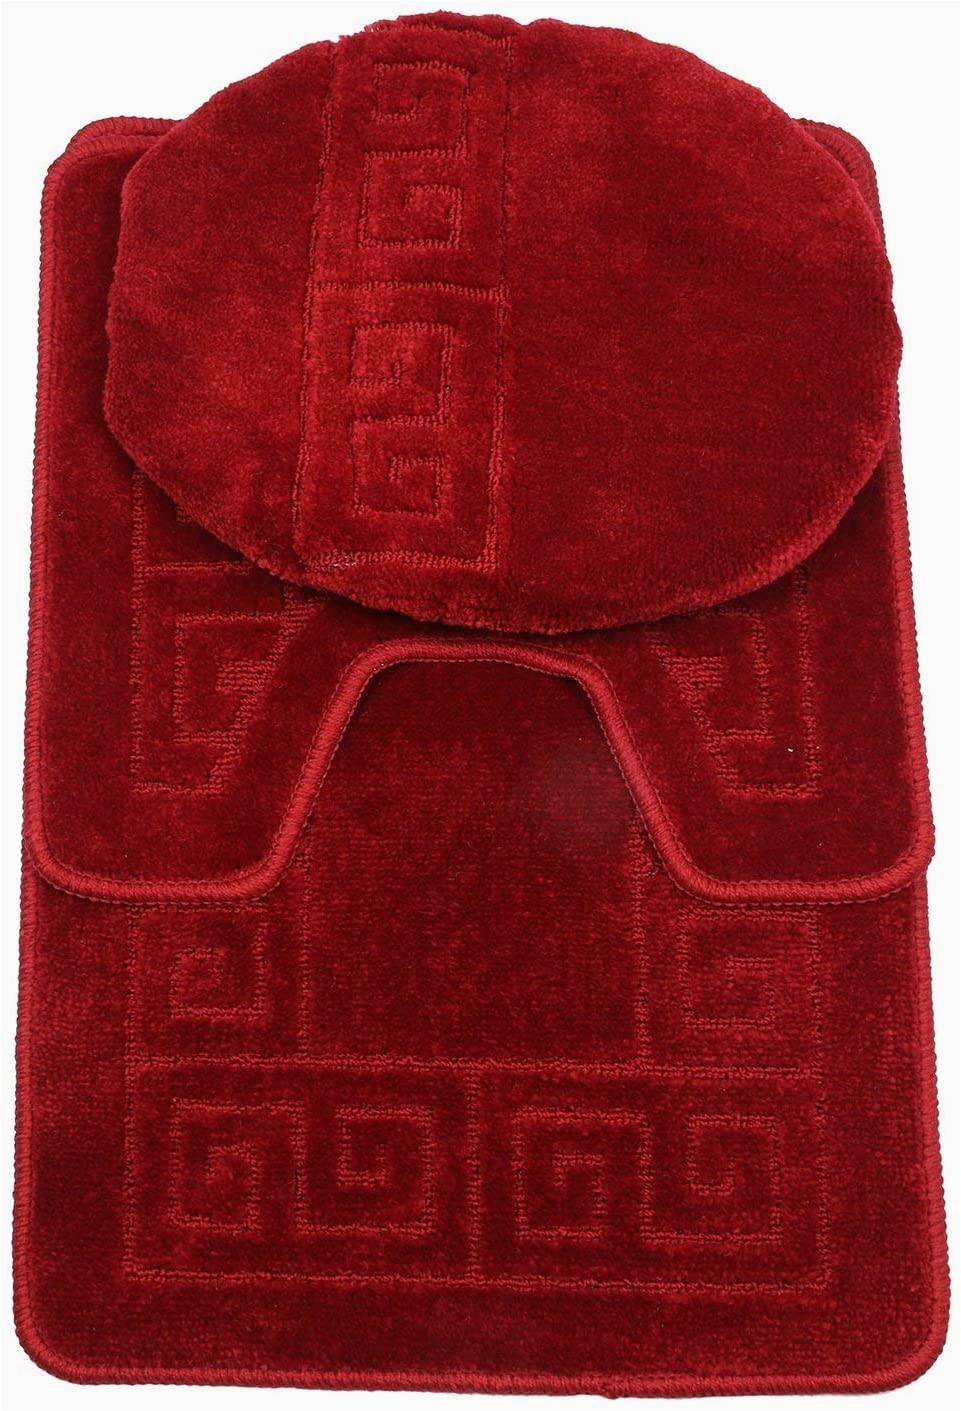 Cheap Red Bathroom Rugs 3 Piece Bath Rug Set Pattern Bathroom Rug 20"x32" Contour Mat 20"x20" with Lid Cover Burgundy